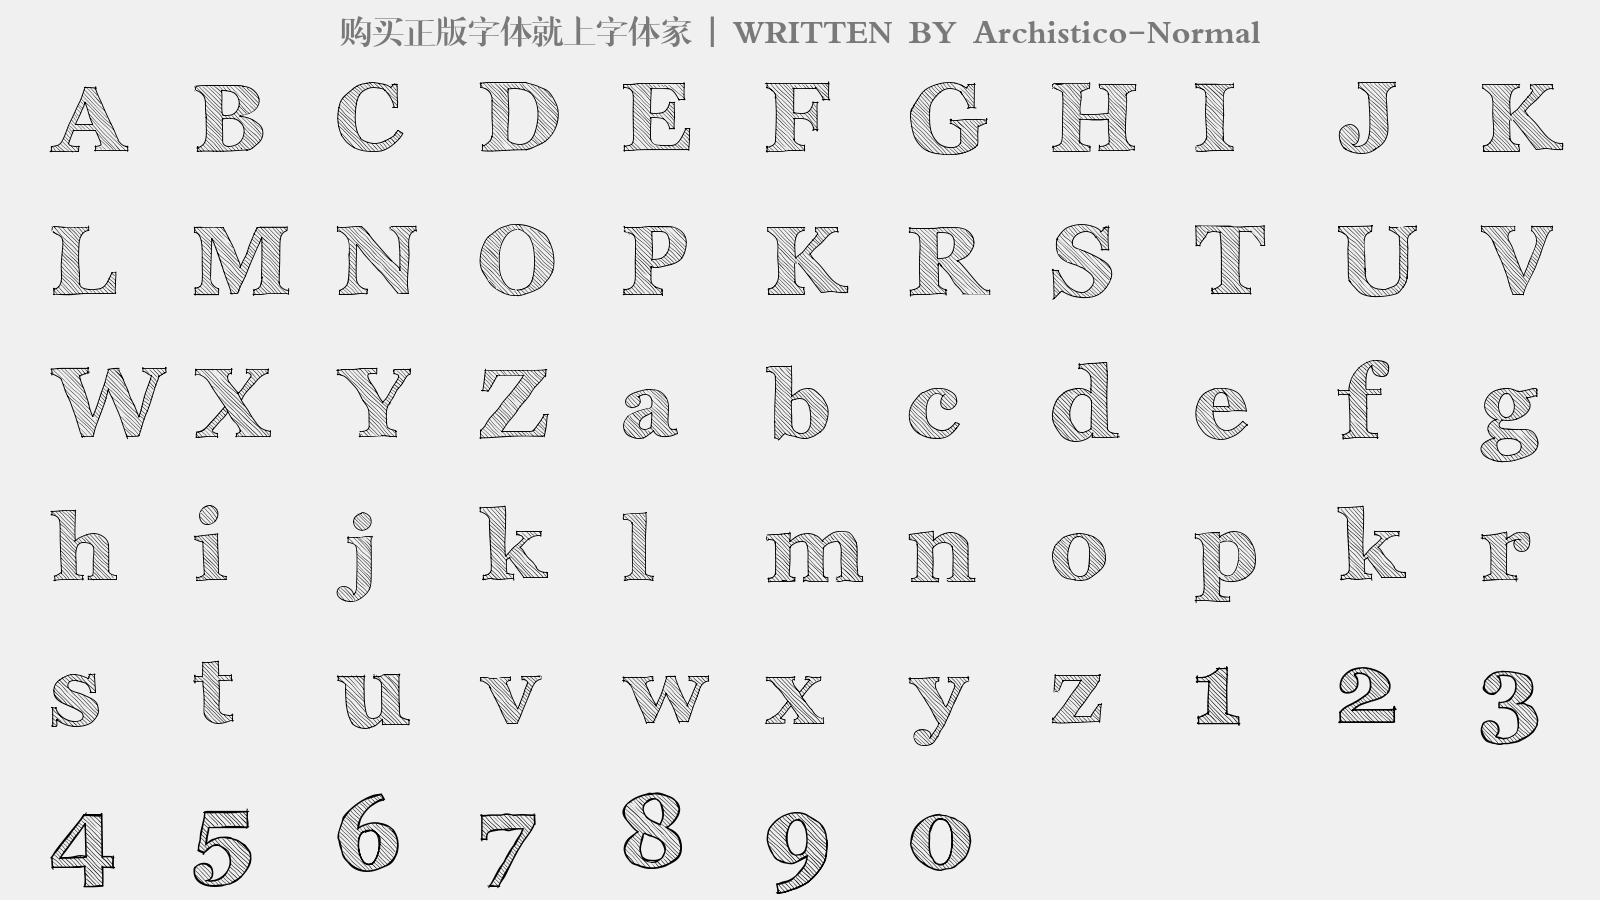 Archistico-Normal - 大写字母/小写字母/数字